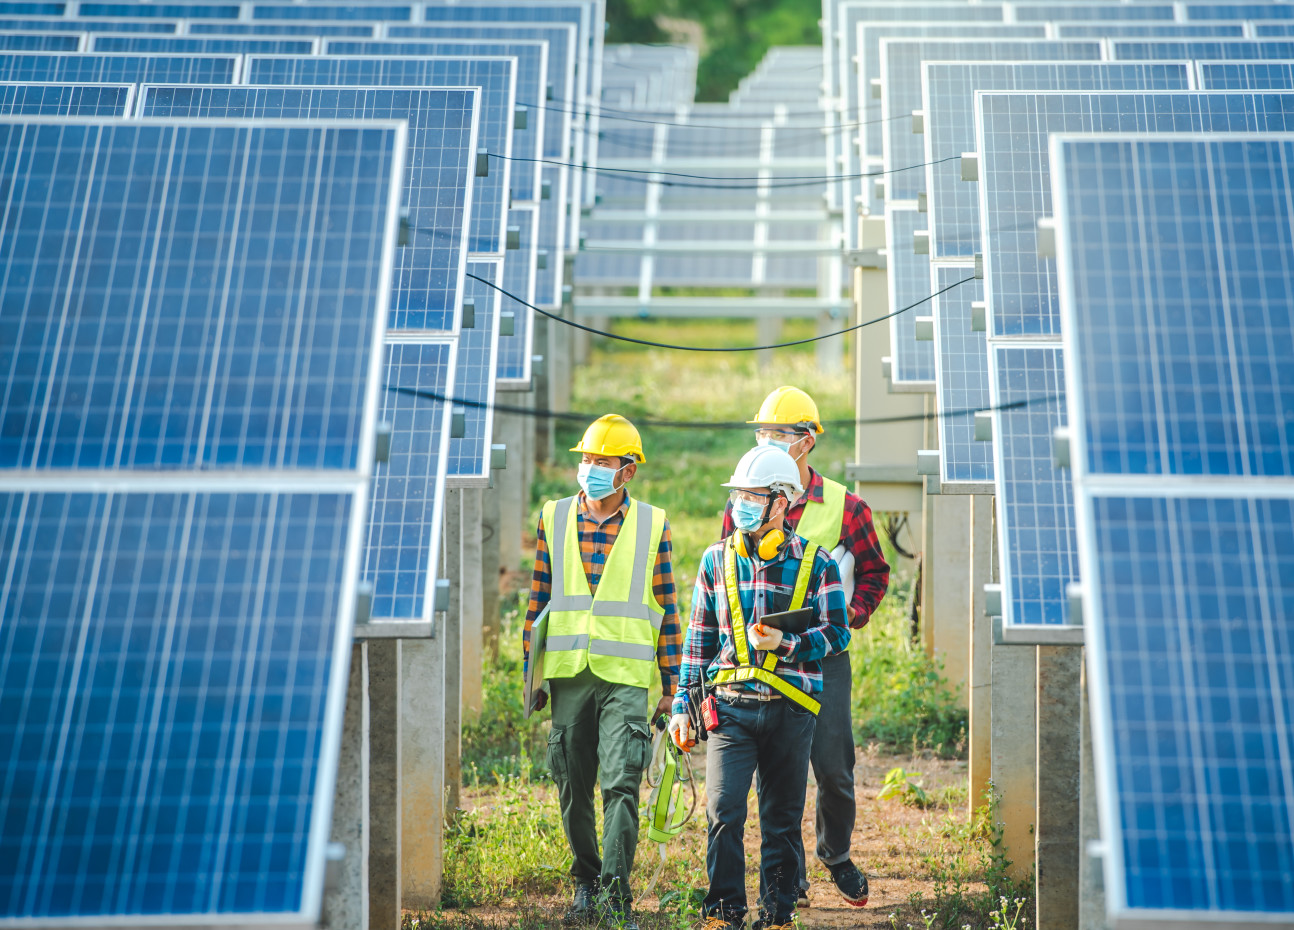 Engineers walking in a field of solar panels